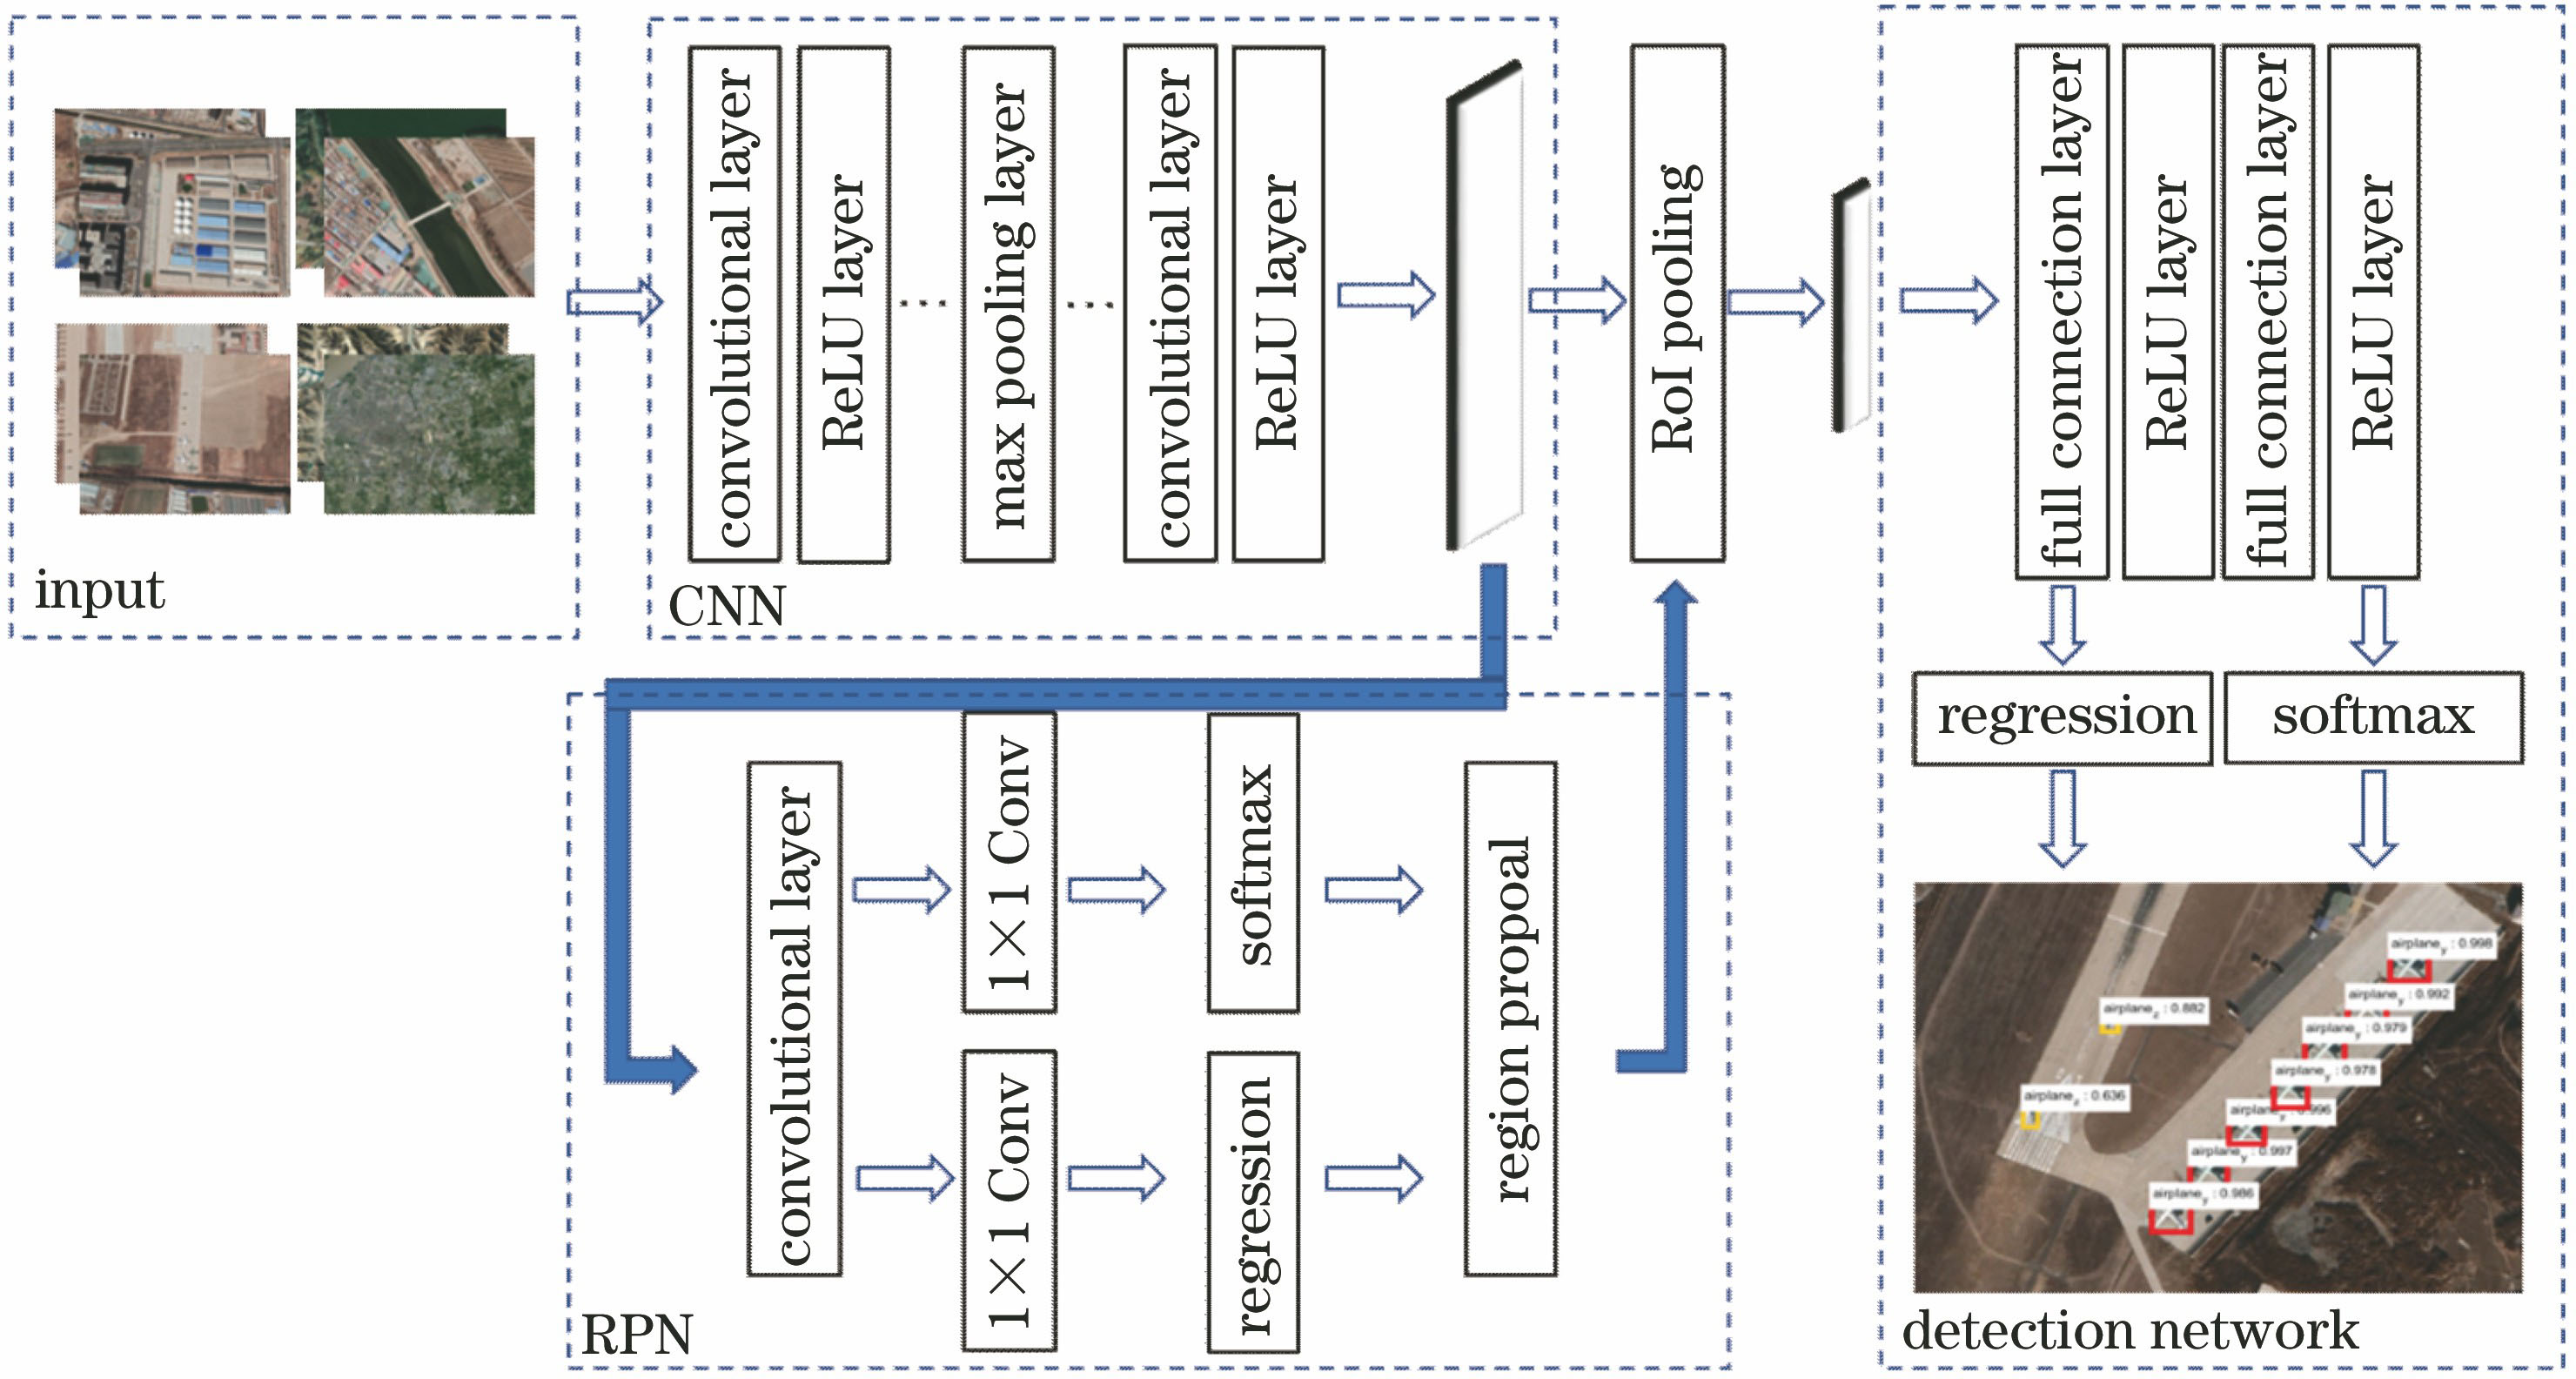 Main process framework of detection